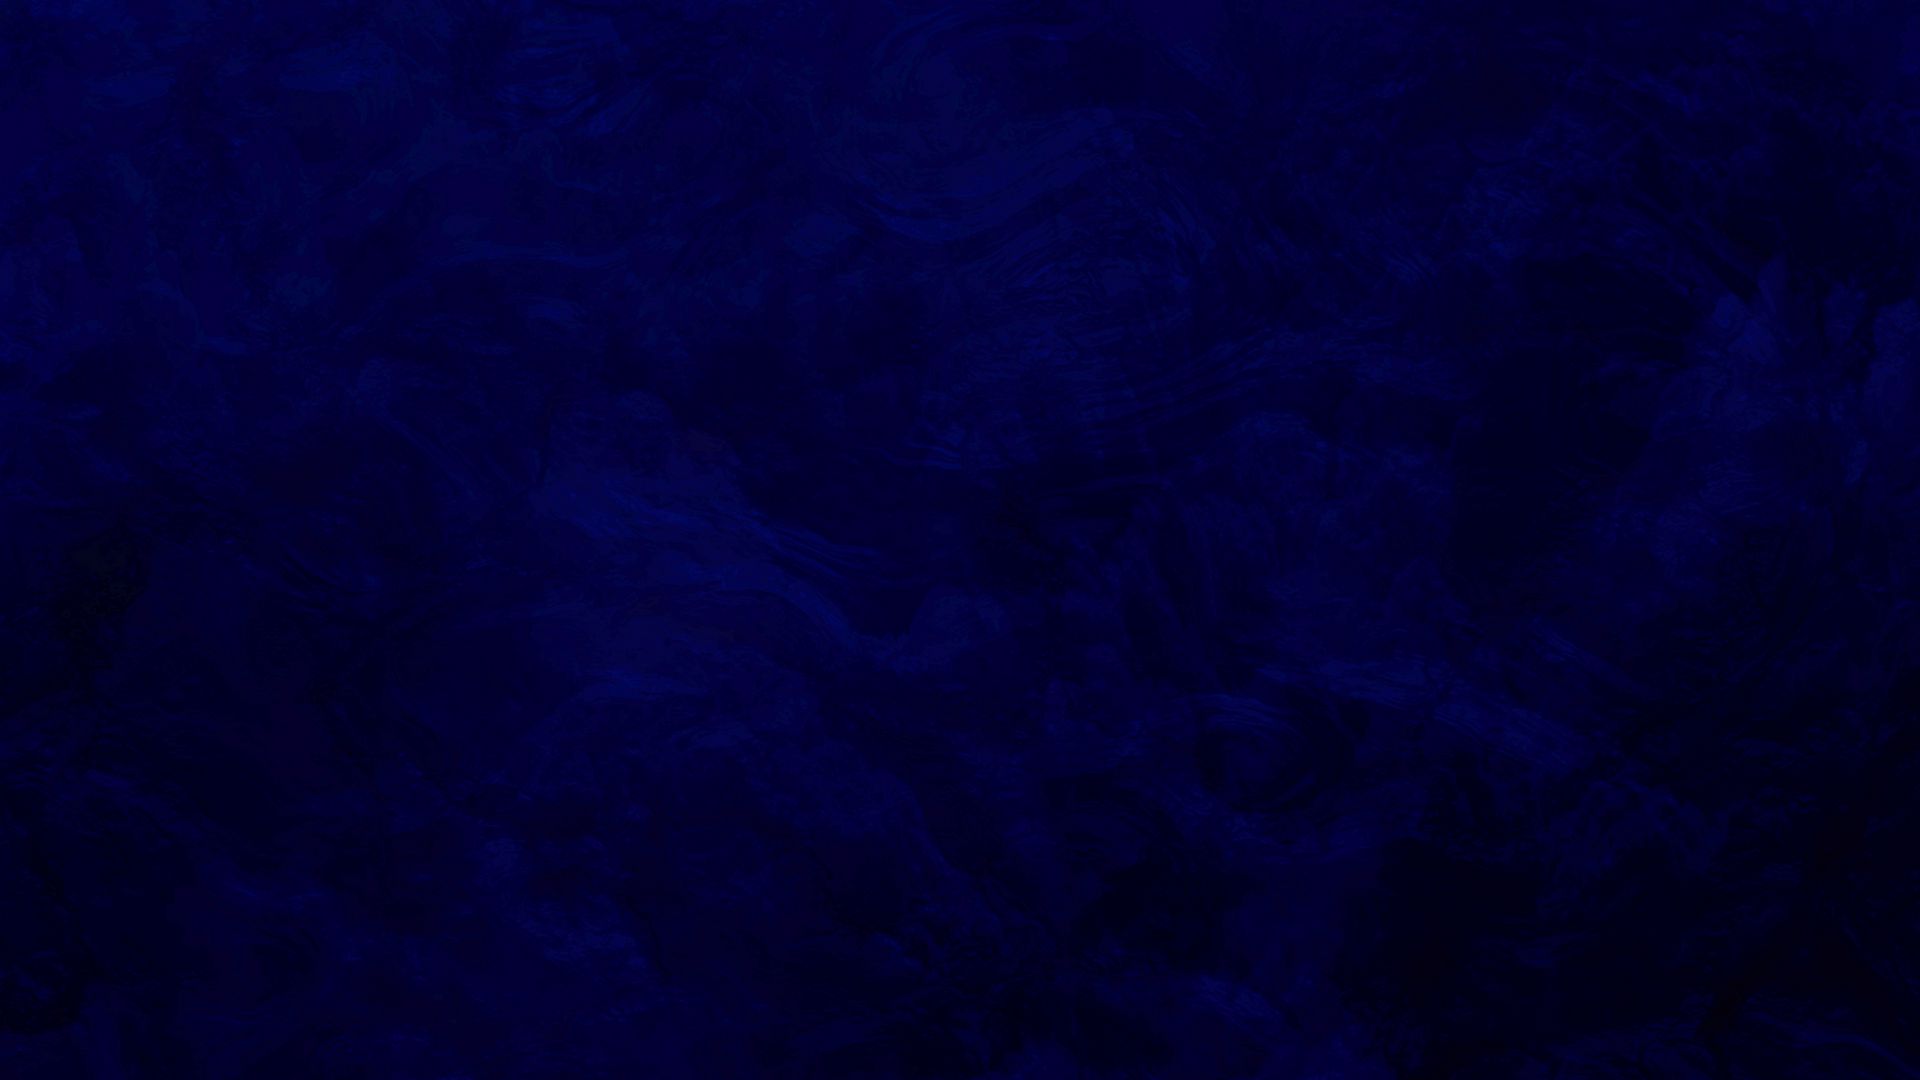 Download wallpaper 1920x1080 texture, surface, dark, blue full hd, hdtv,  fhd, 1080p hd background